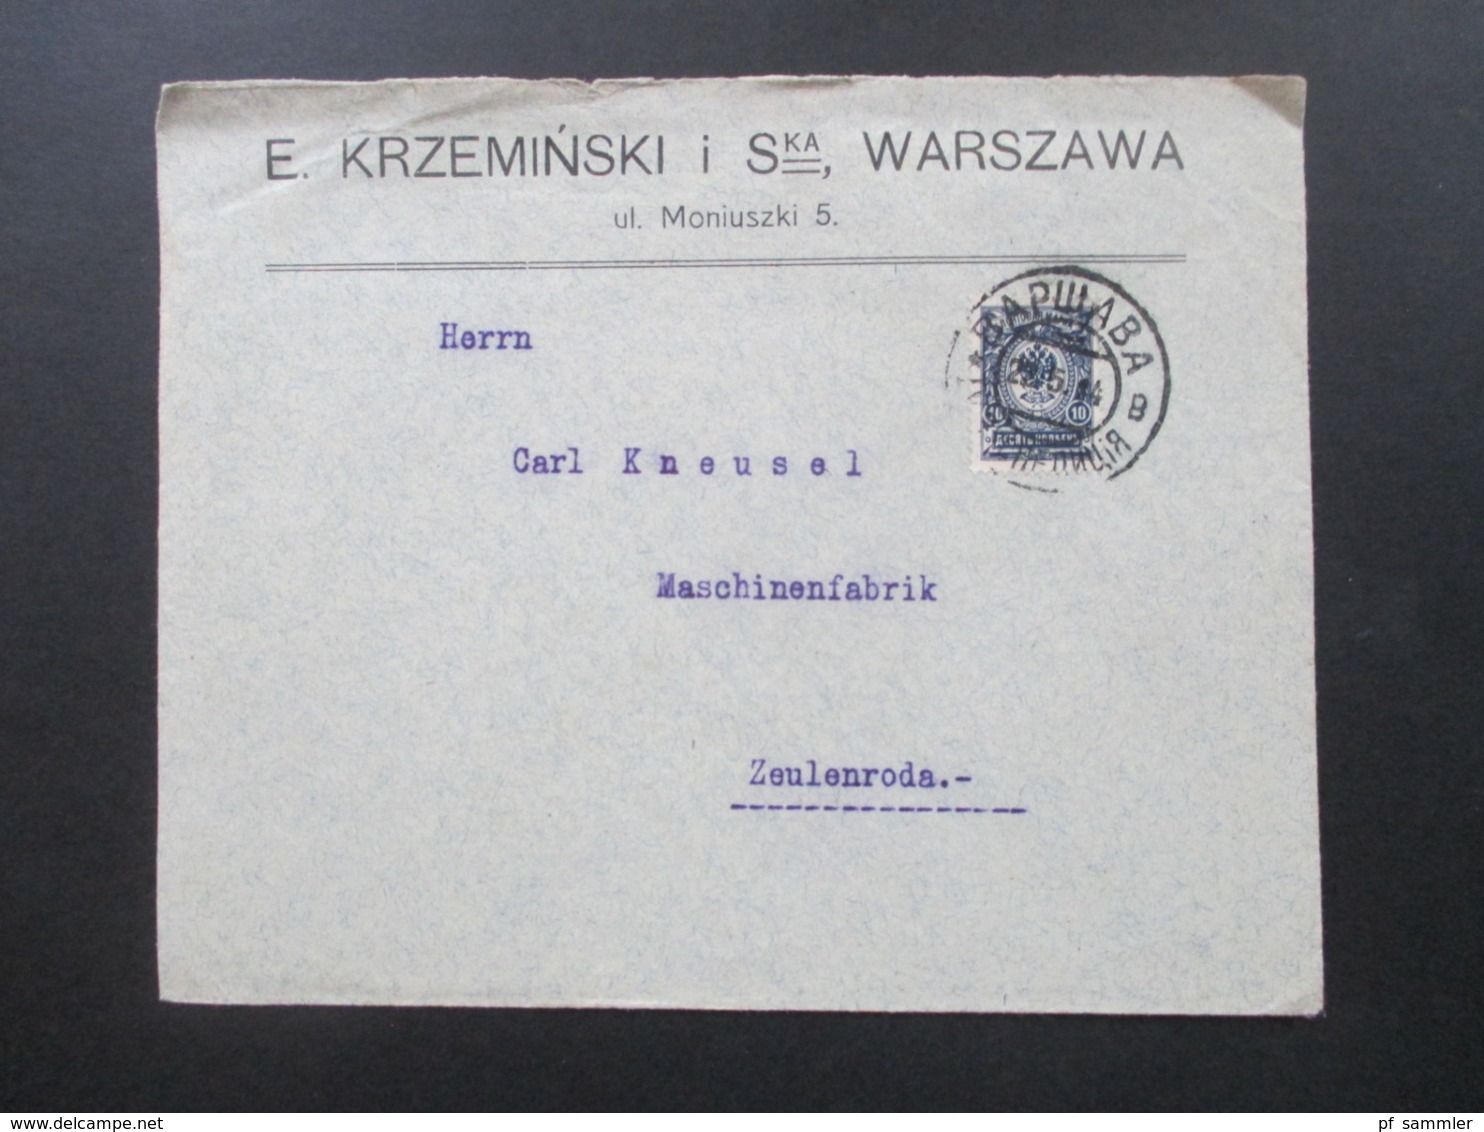 Russland / Polen 1914 Firmenbrief E. Krzeminski Warszawa Frankiert Mit Russischer Marke Stempel Bapwaba - Covers & Documents